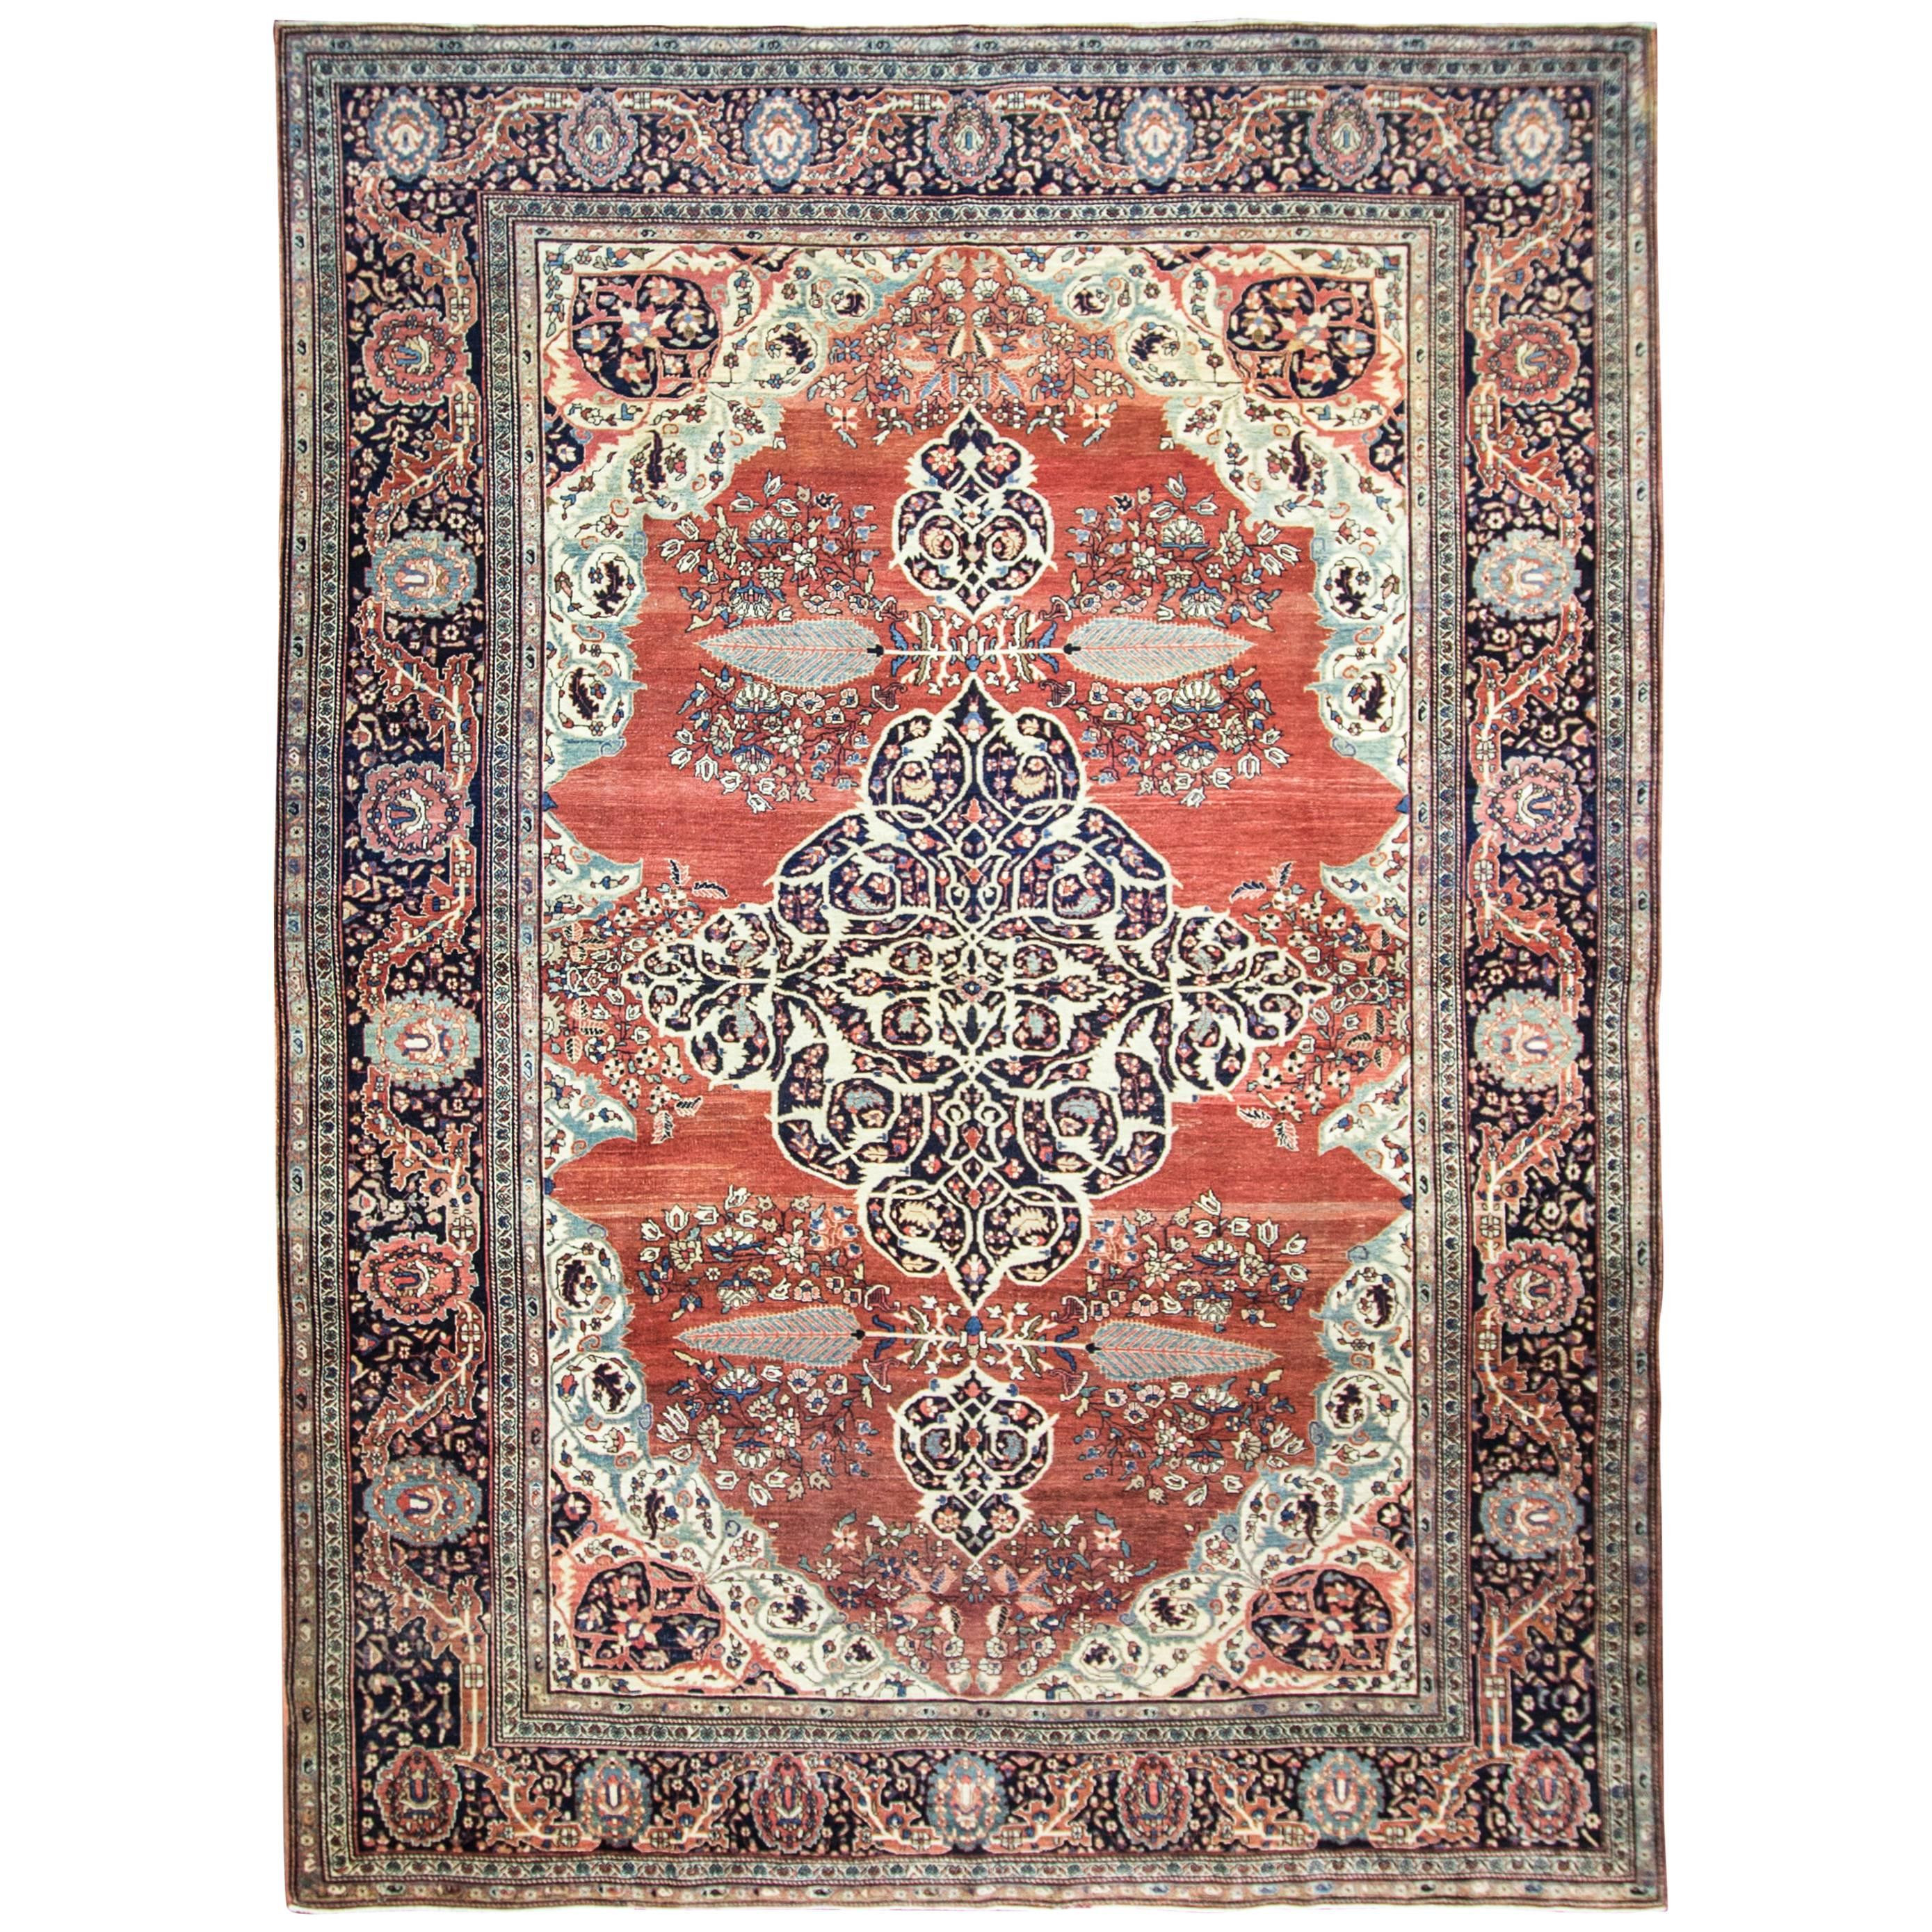  Antique Persian Feraghan Sarouk Carpet For Sale